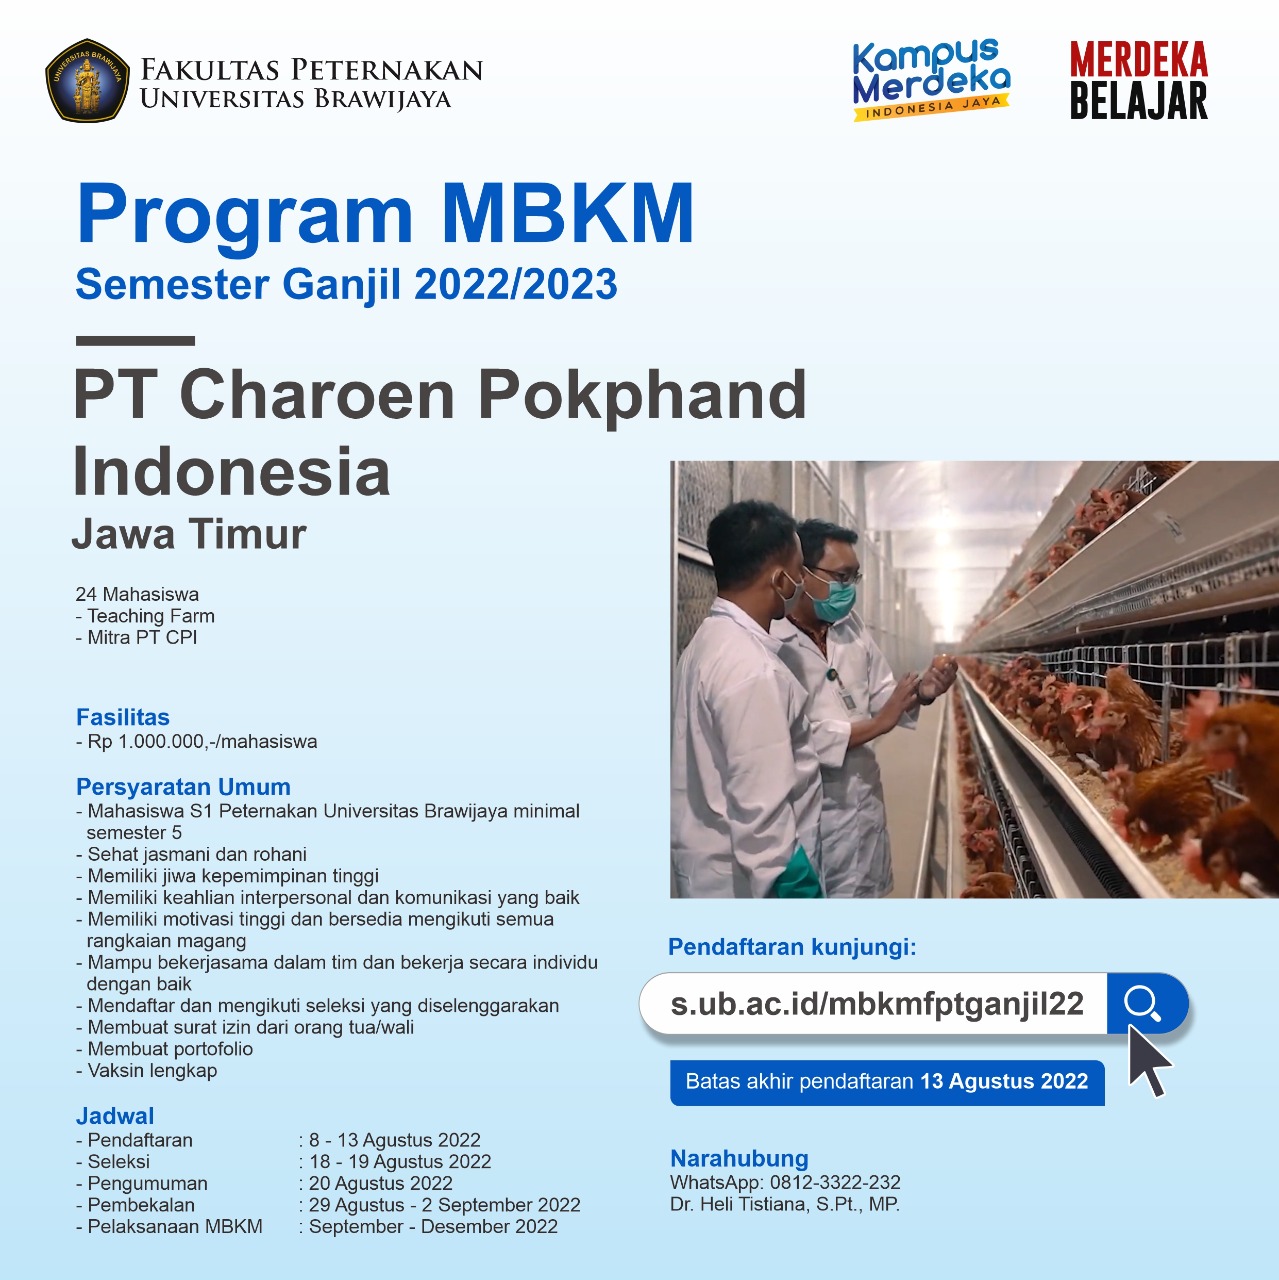 PT. Charoen Pokphand Indonesia MBKM Program Odd Semester 2022/2023